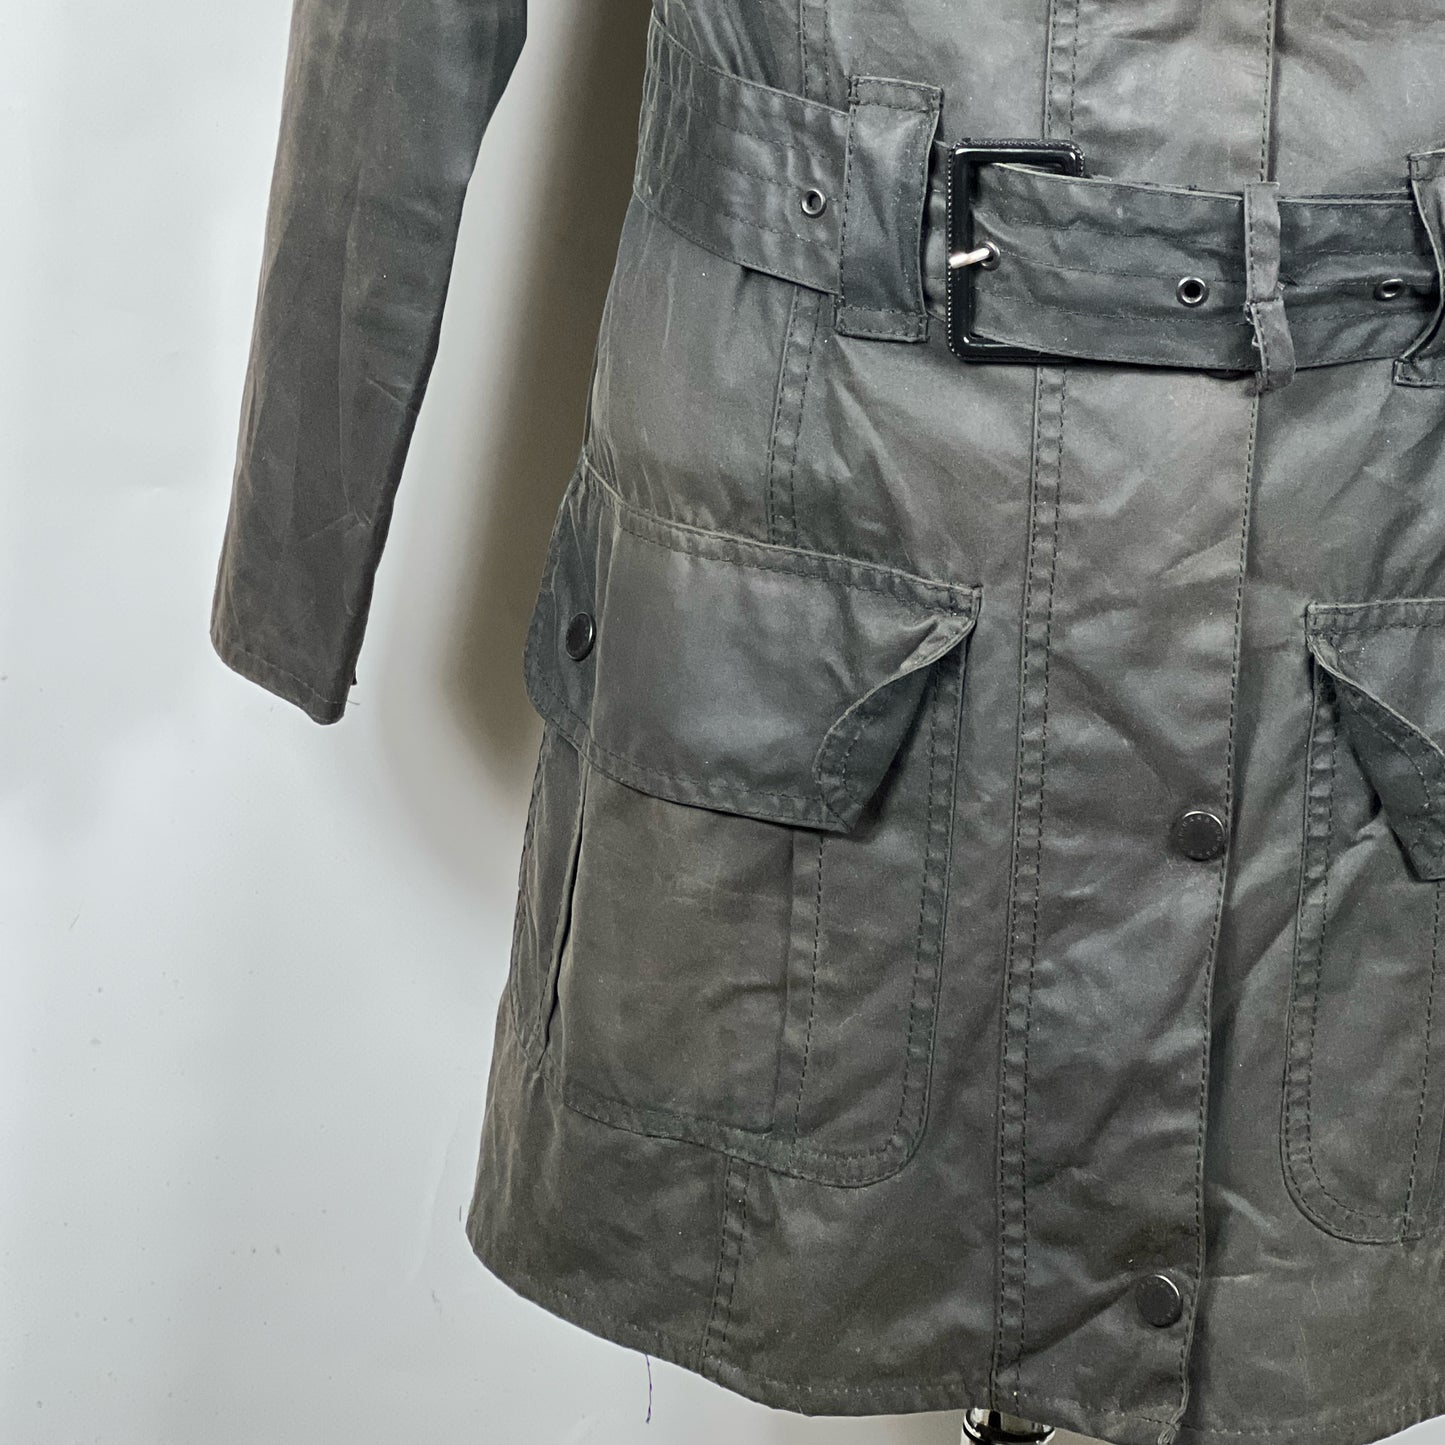 Giacca Barbour con cintura nera utility mac UK14 -Black wax jacket size UK14 with belt M